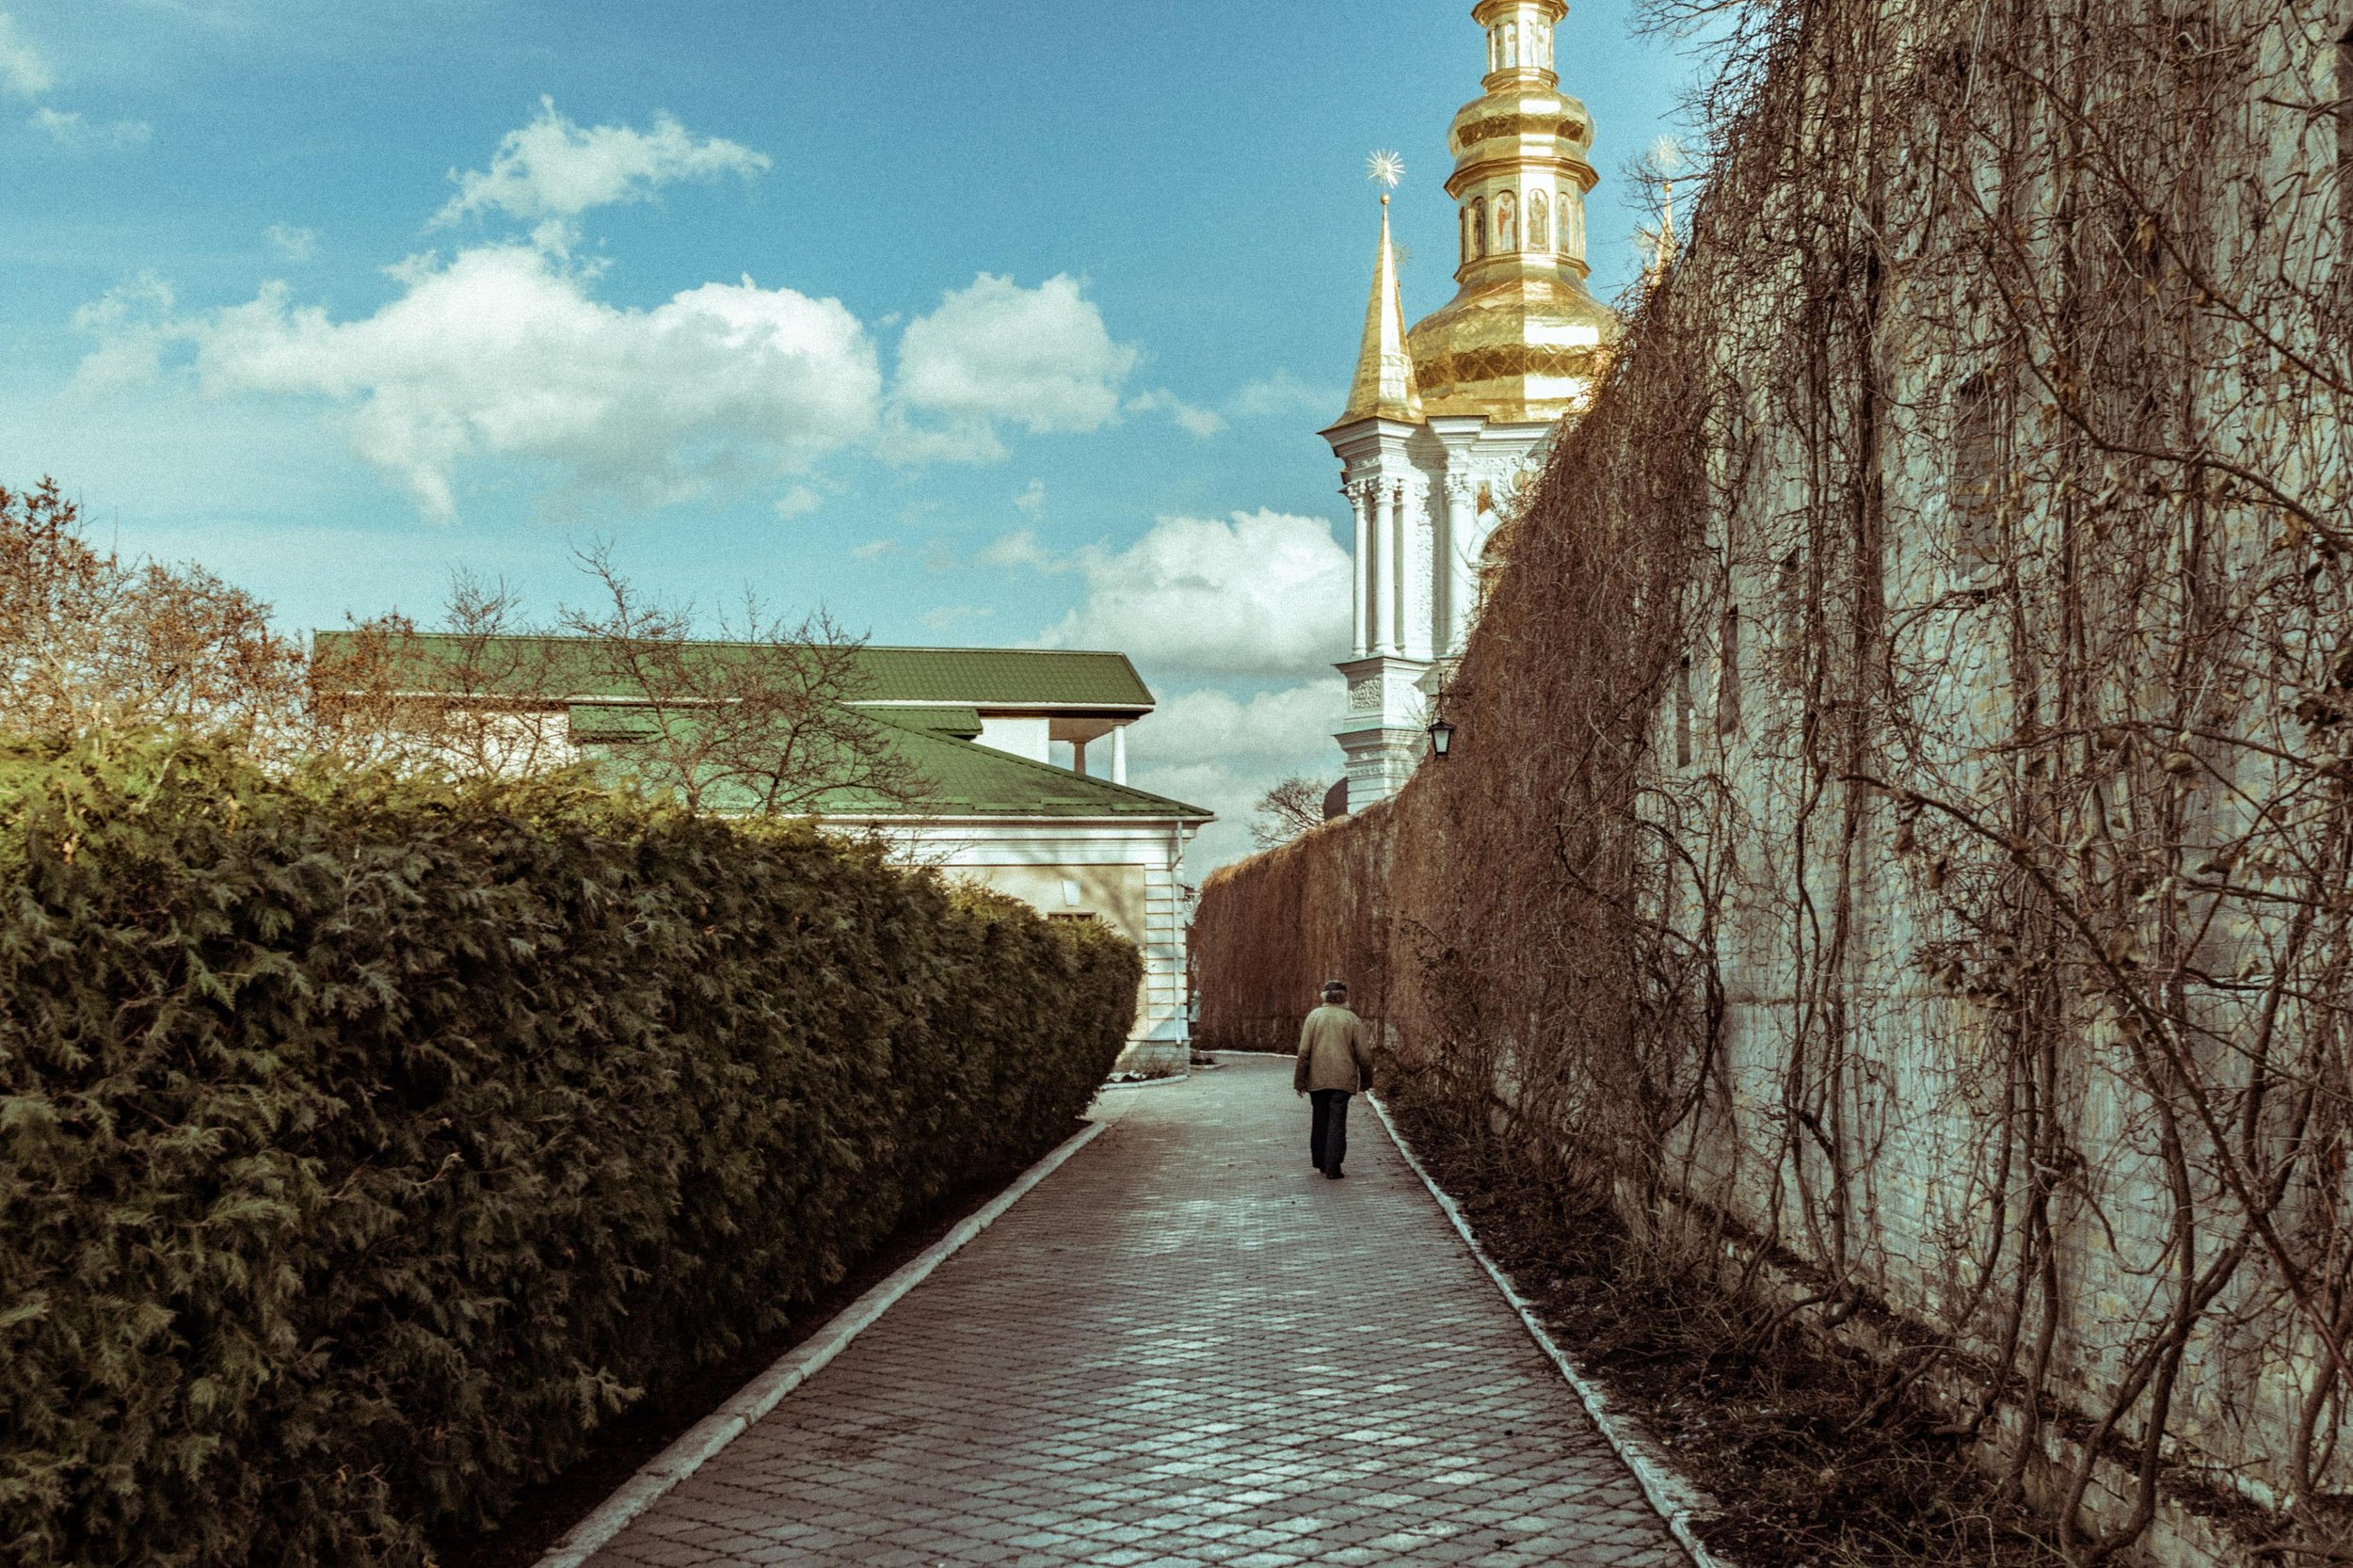 2019-3-9 Kiev, Urkaine - Jack Robert Photography (25 of 54).jpg